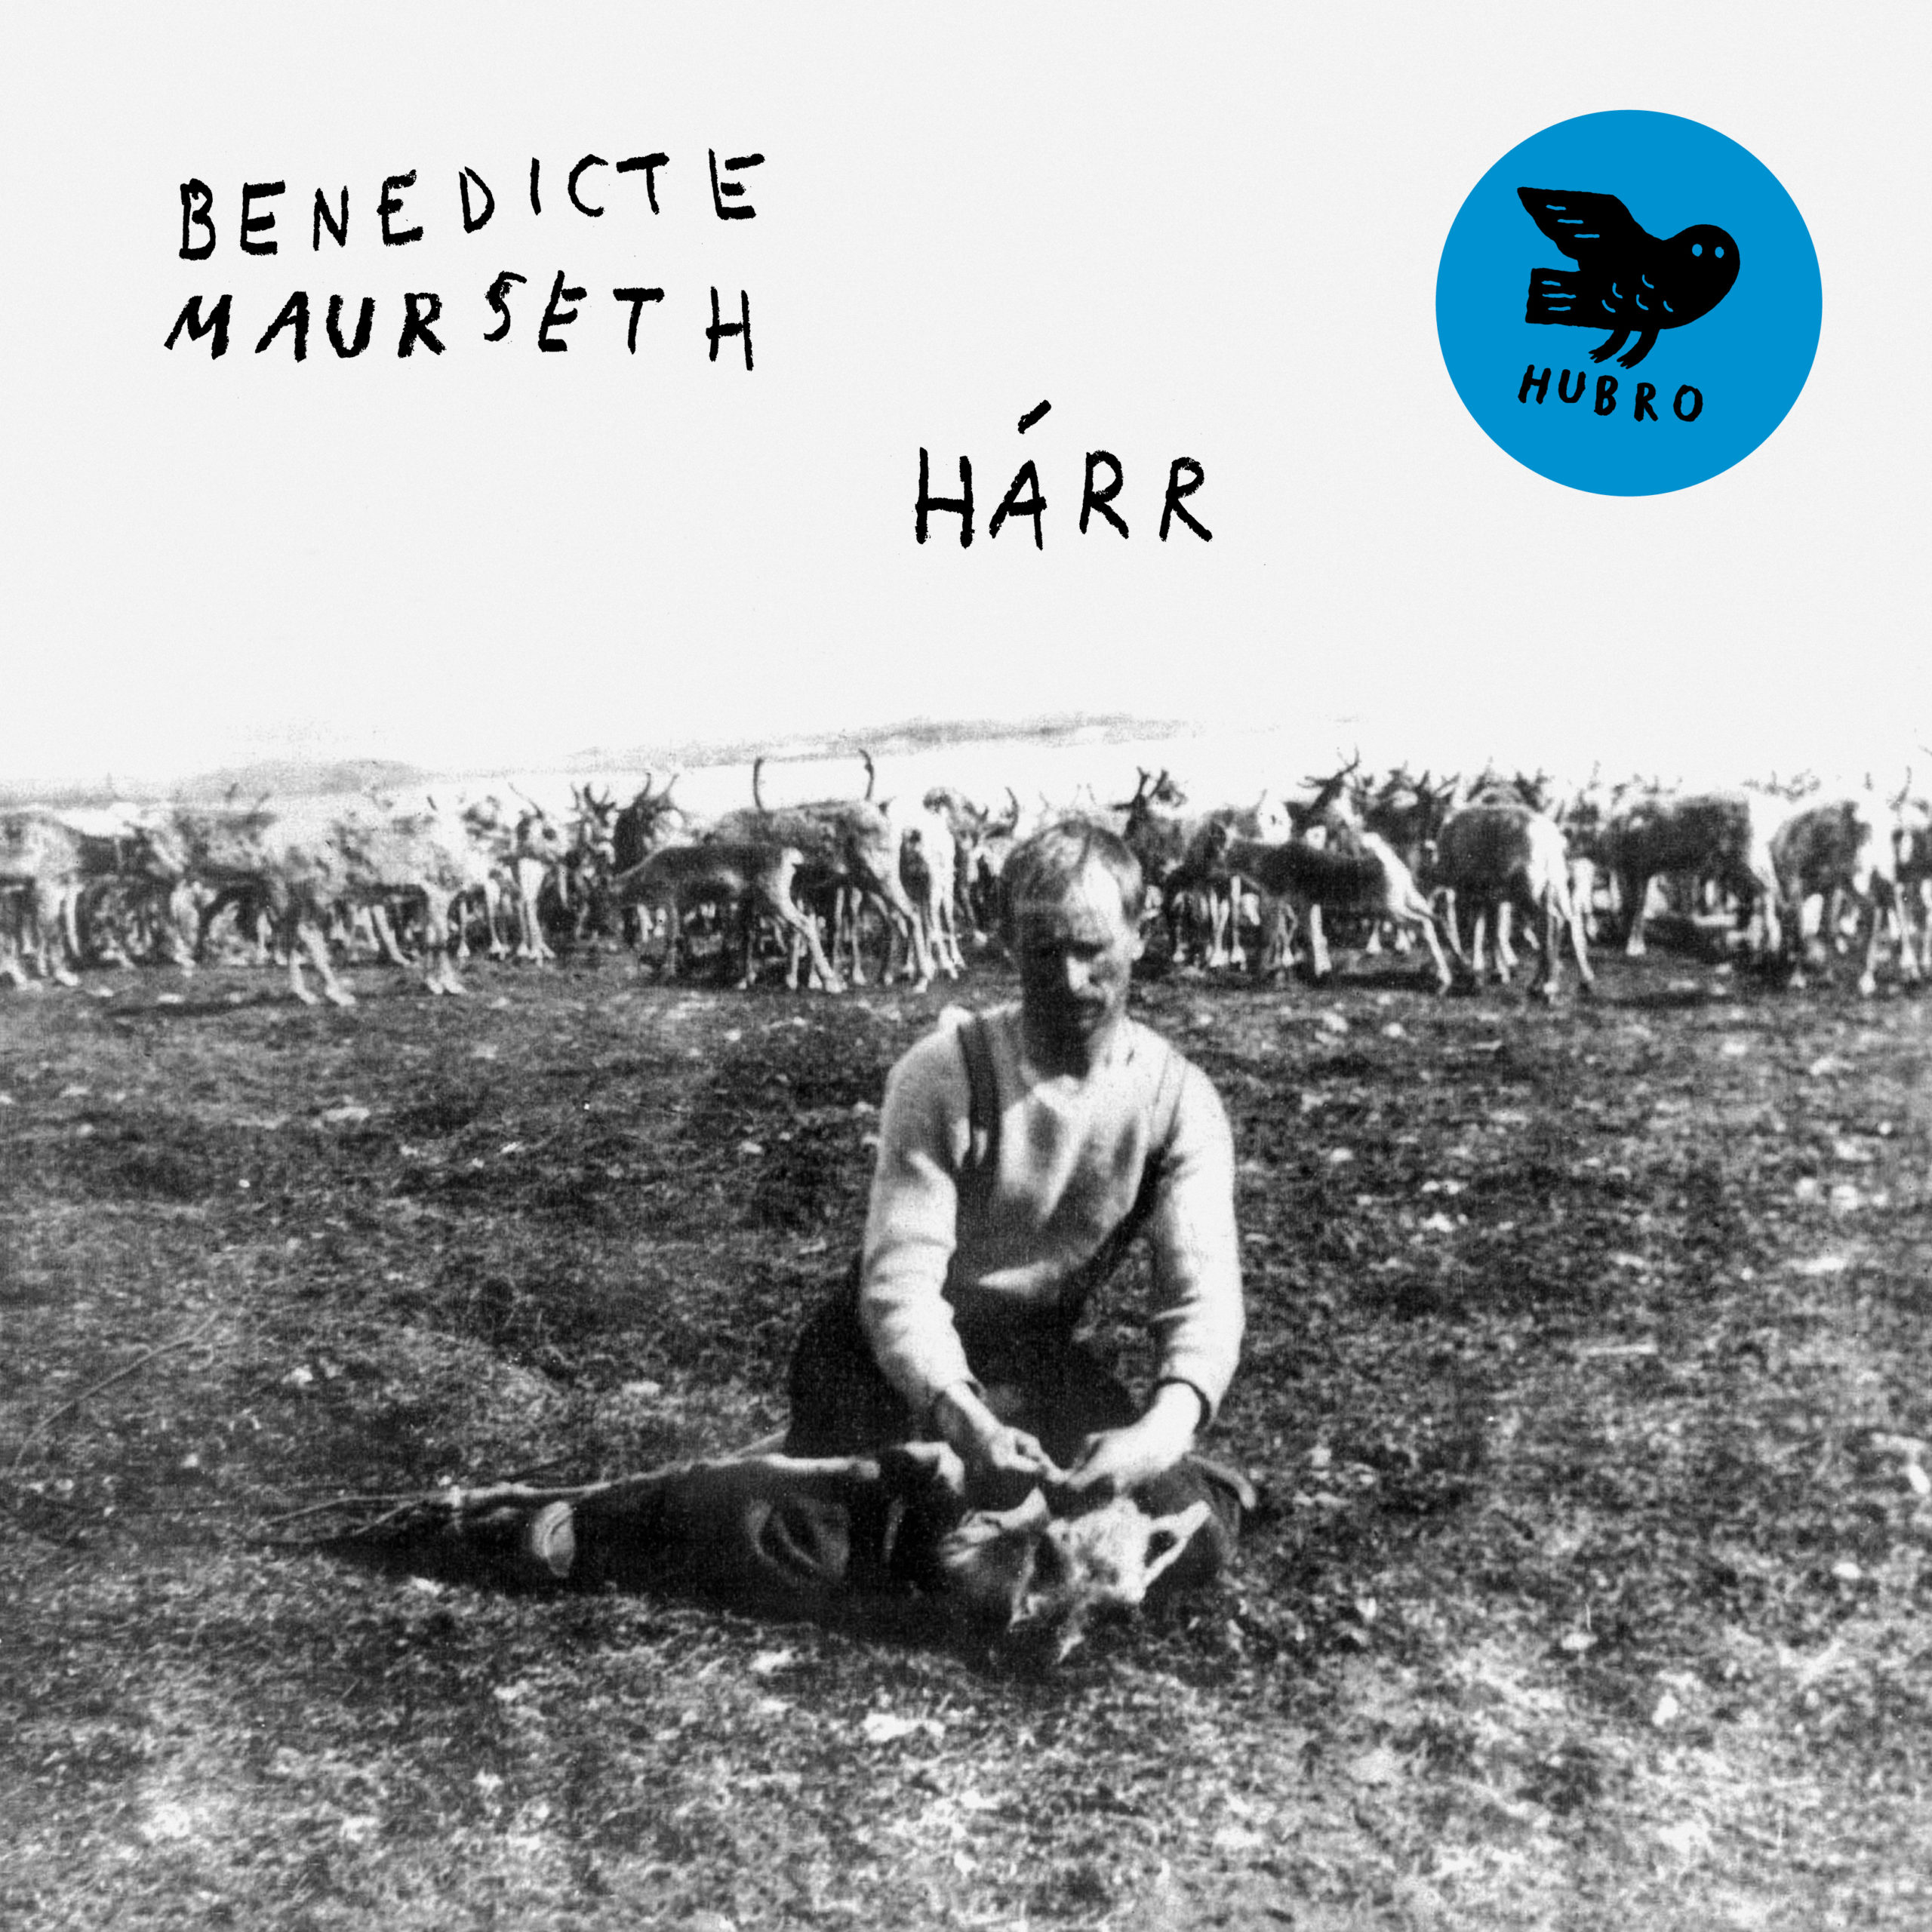 Benedicte Maurseth – Hárr